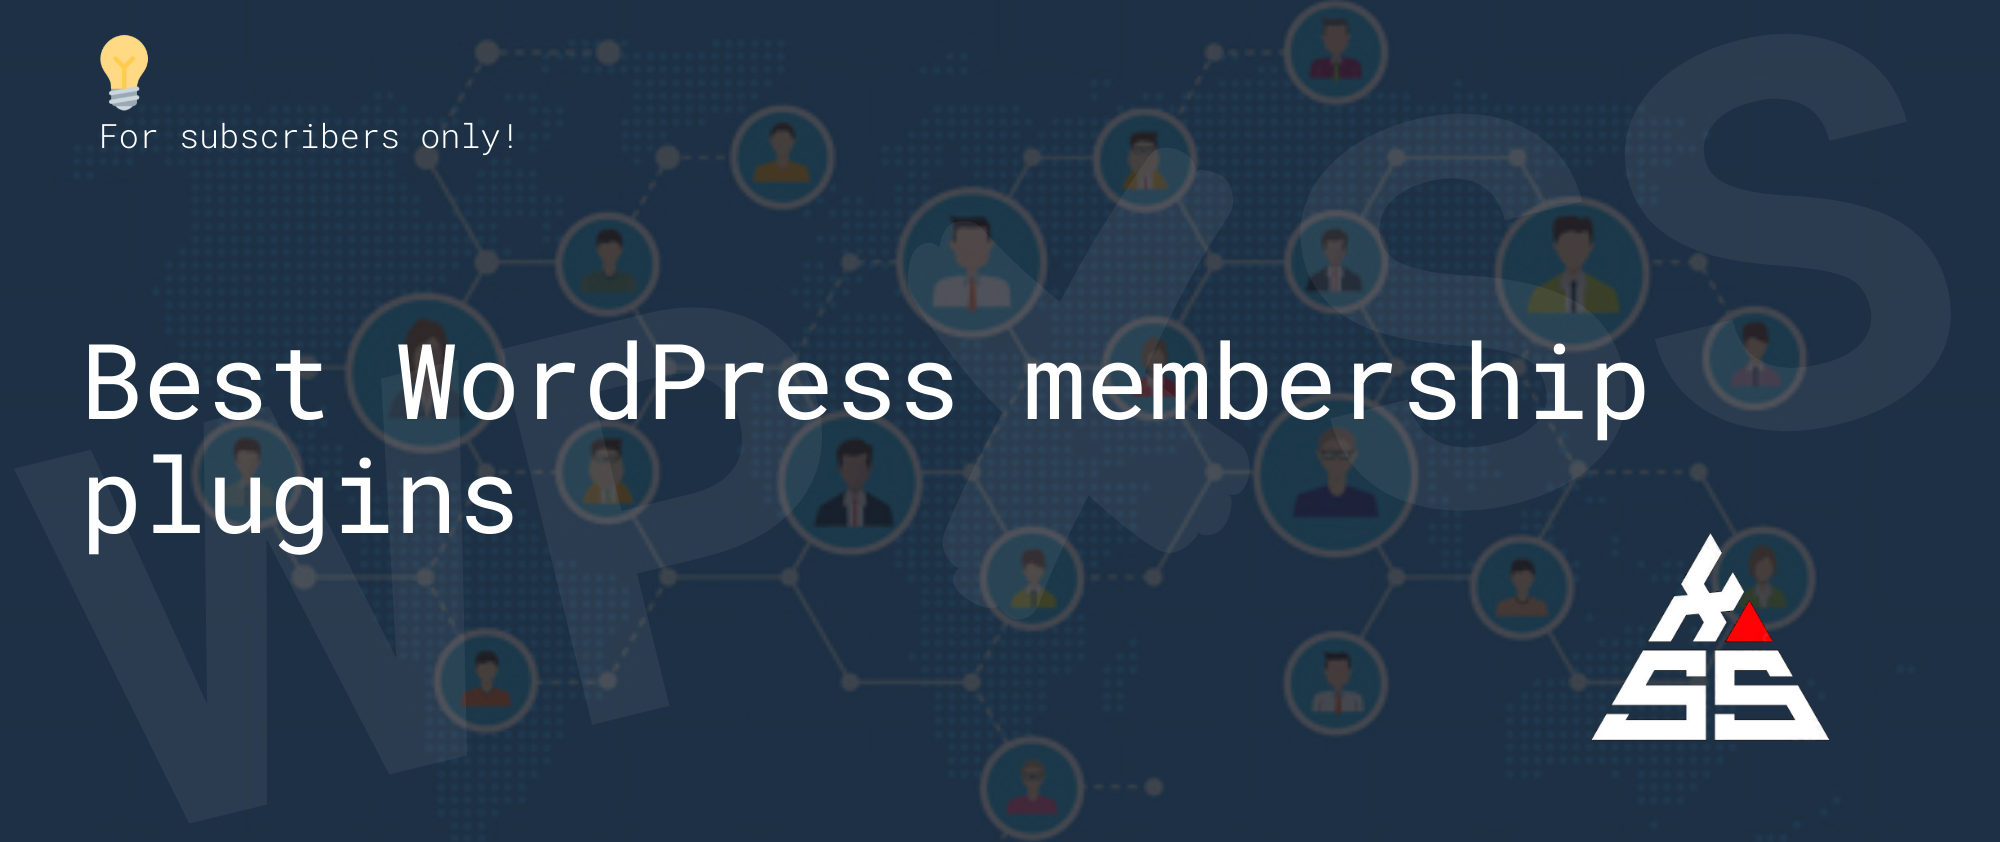 Best WordPress membership plugins - Best WordPress 👥 membership plugins